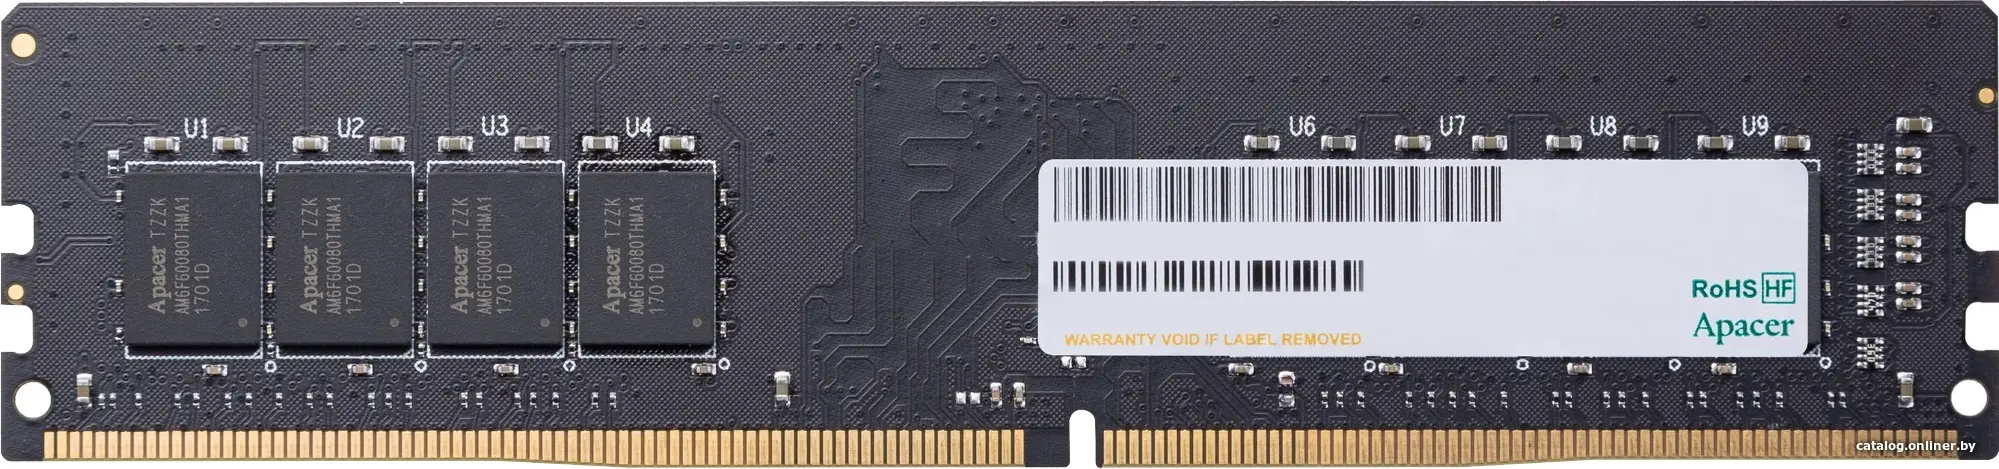 Купить Apacer  DDR4   16GB  2666MHz UDIMM (PC4-21300) CL19 1.2V (Retail) 1024*8 (AU16GGB26CQYBGH / EL.16G2V.GNH), цена, опт и розница